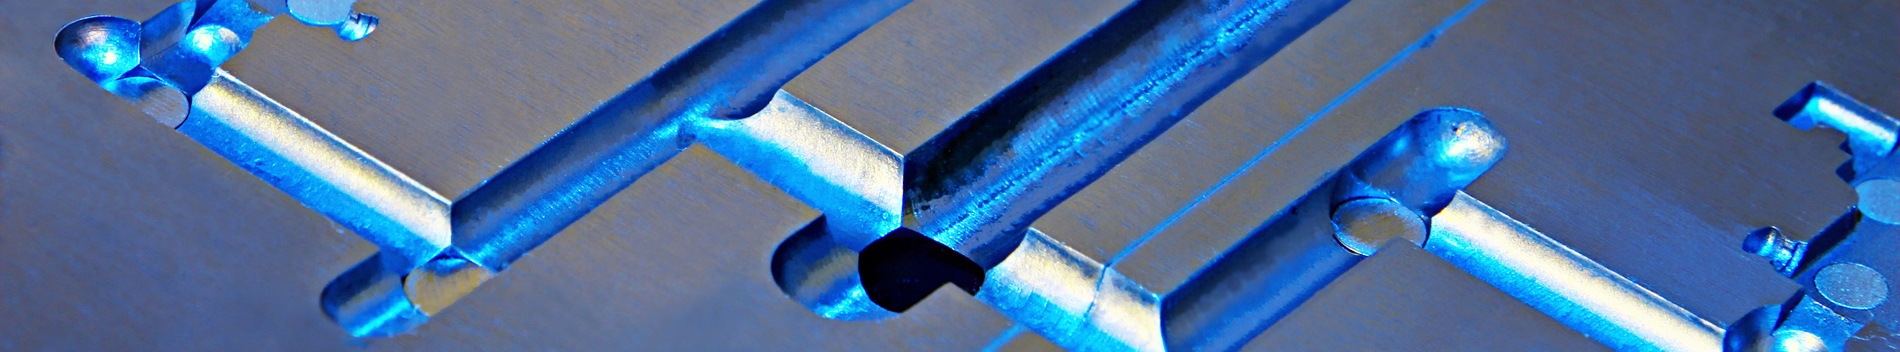 Nickel Alloys, Titanium and Stainless Steel axles